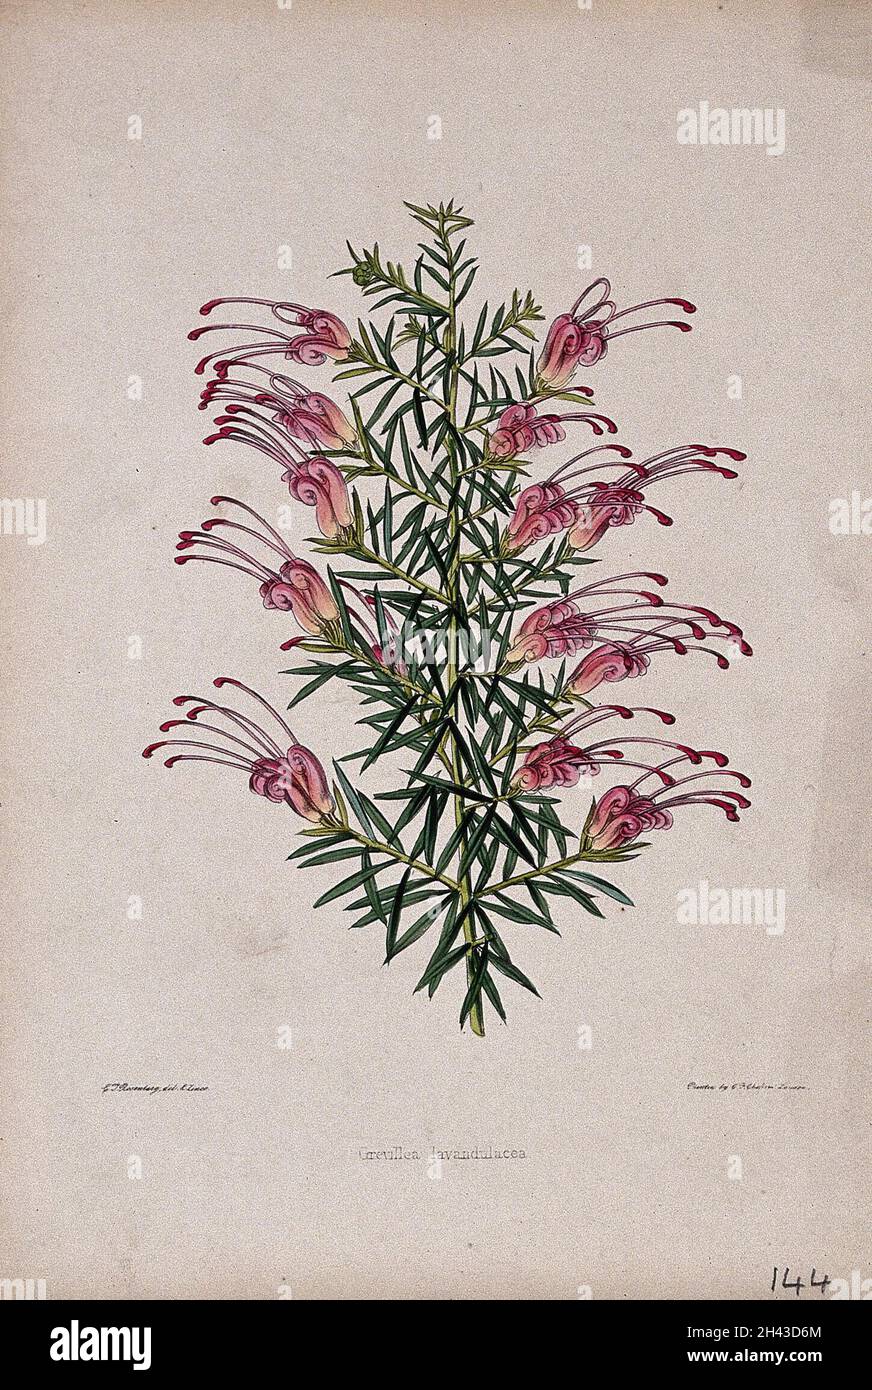 A plant (Grevillea lavandulacea): flowering stem. Coloured zincograph by C. Rosenberg, c. 1850, after himself. Stock Photo